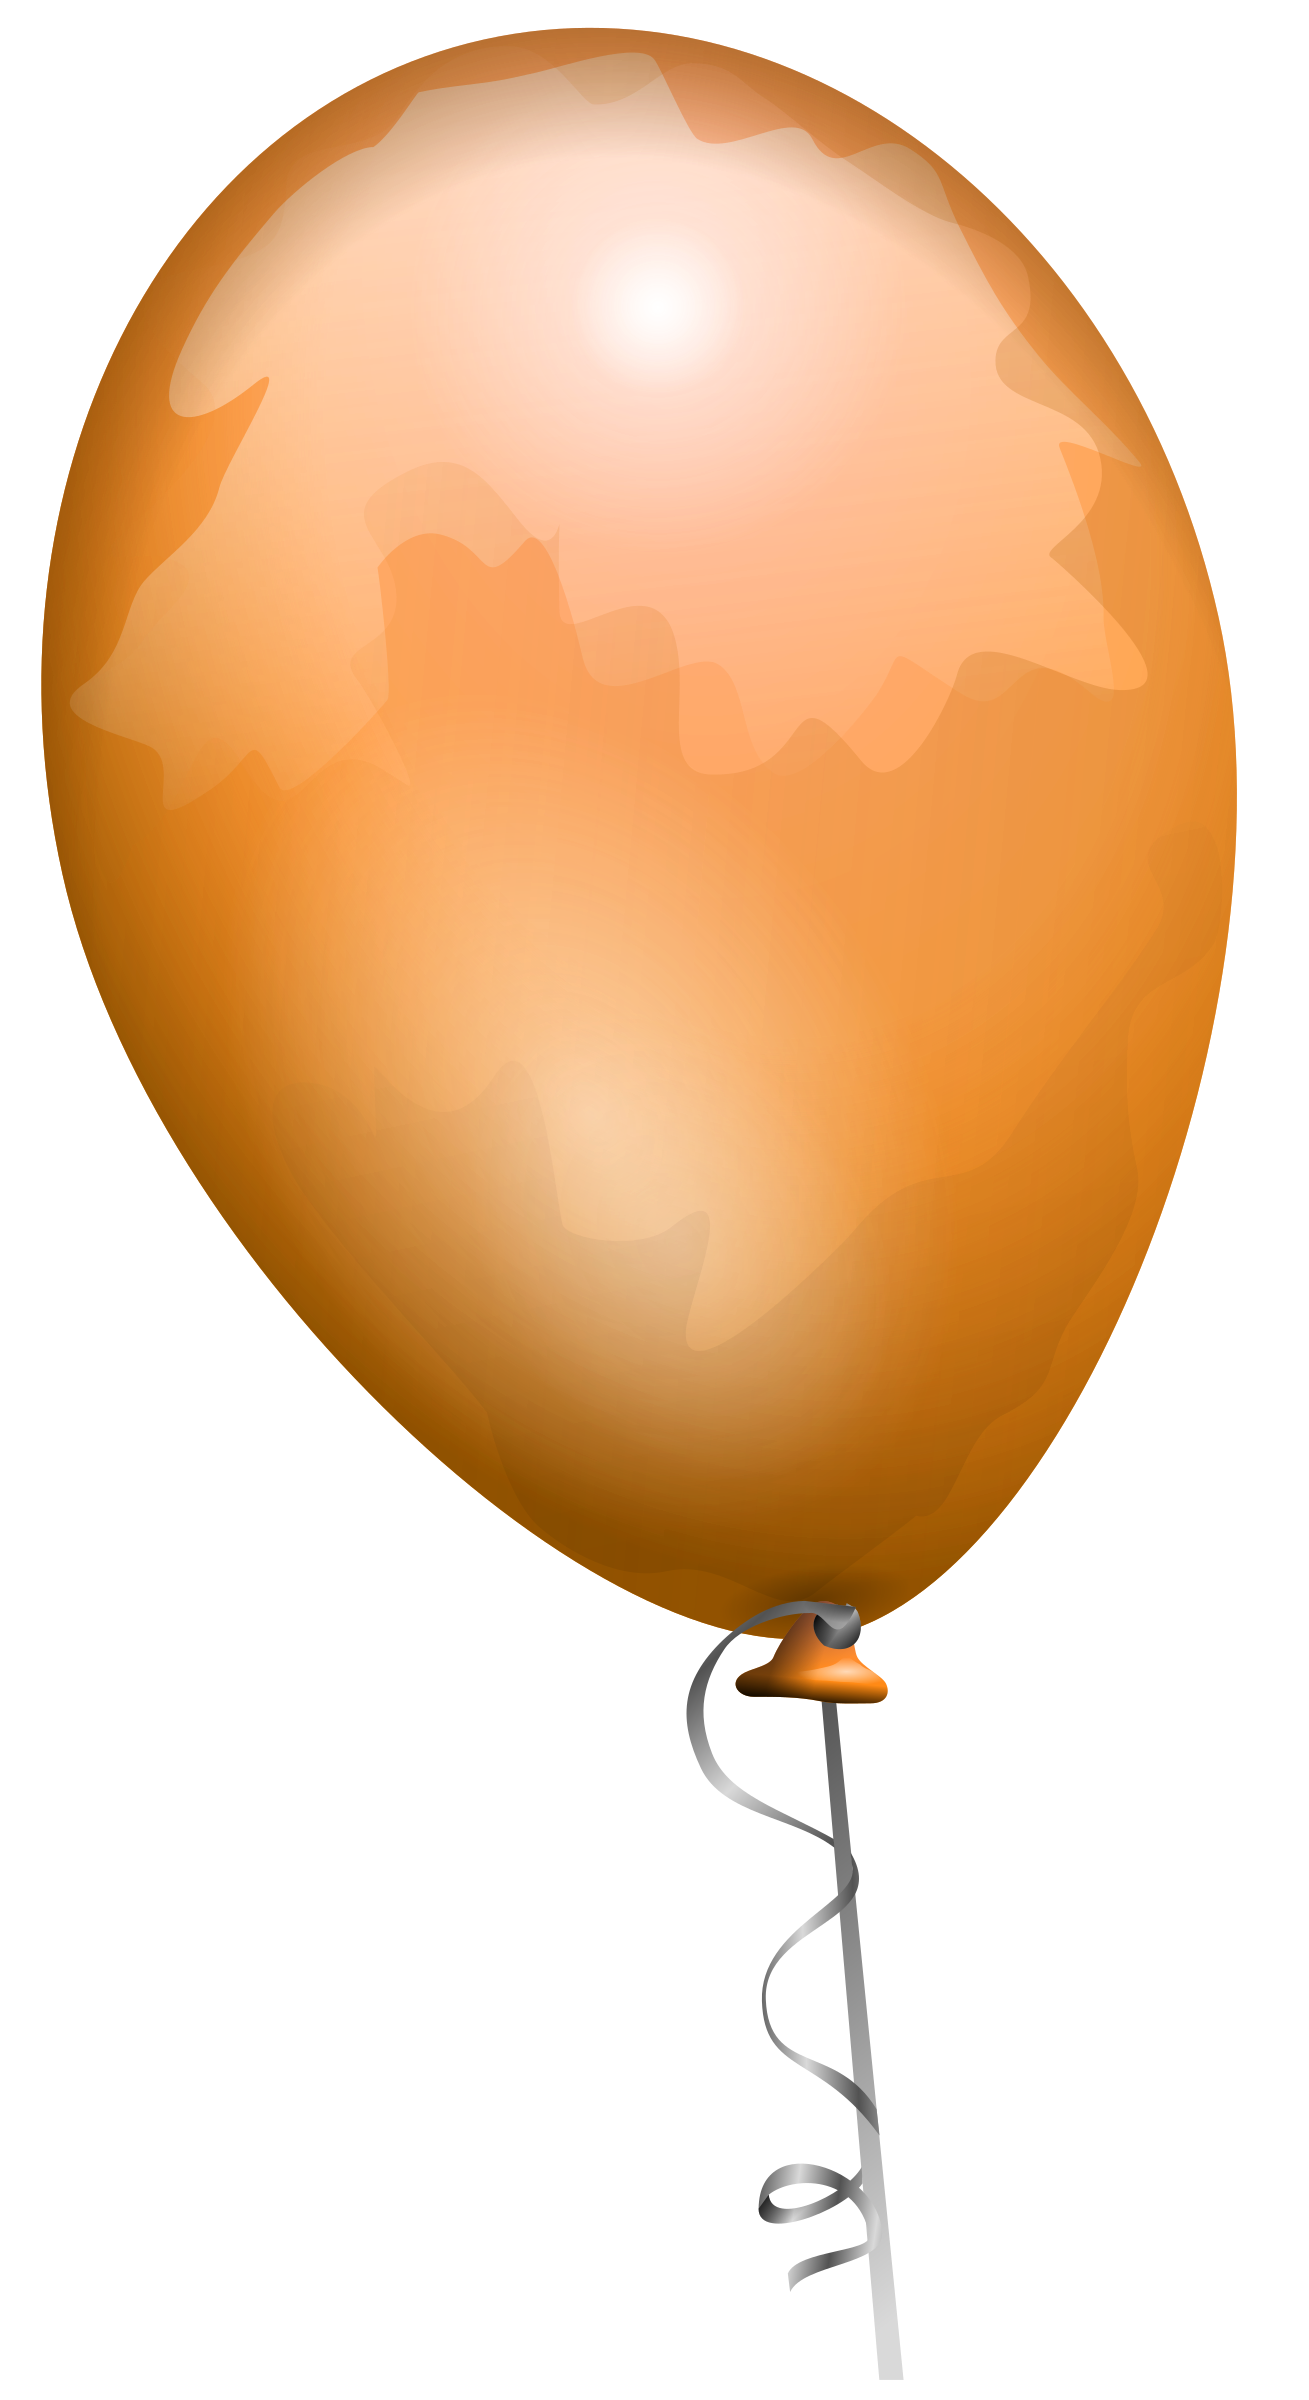 Clipart balloon orange. Big image png